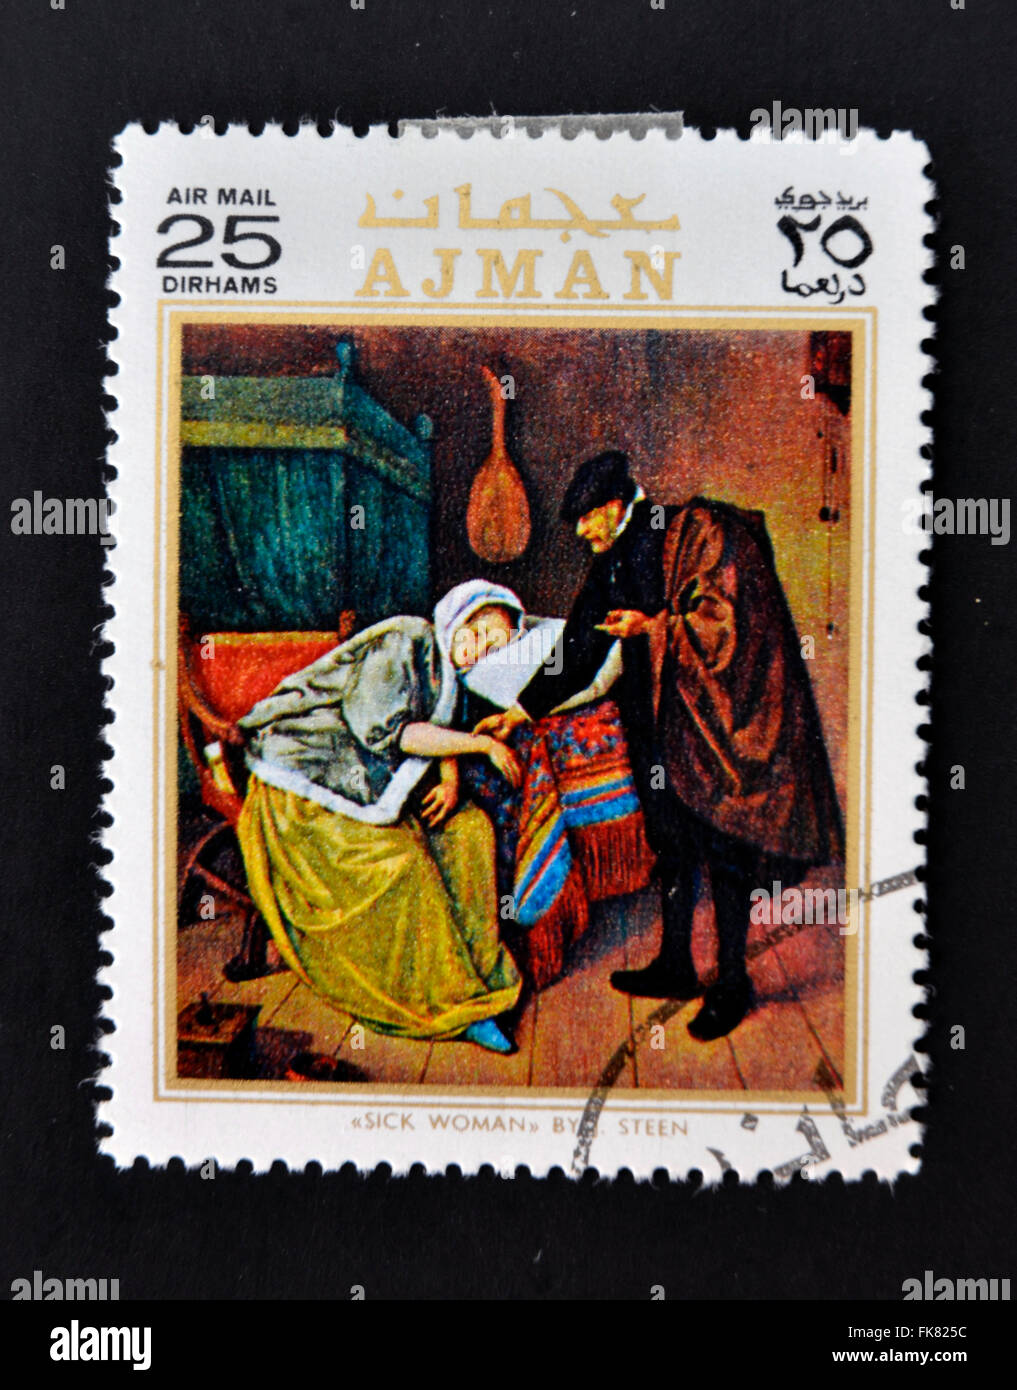 AJMAN - CIRCA 1970: A stamp printed in Ajman shows sick woman by Steen, circa 1970 Stock Photo